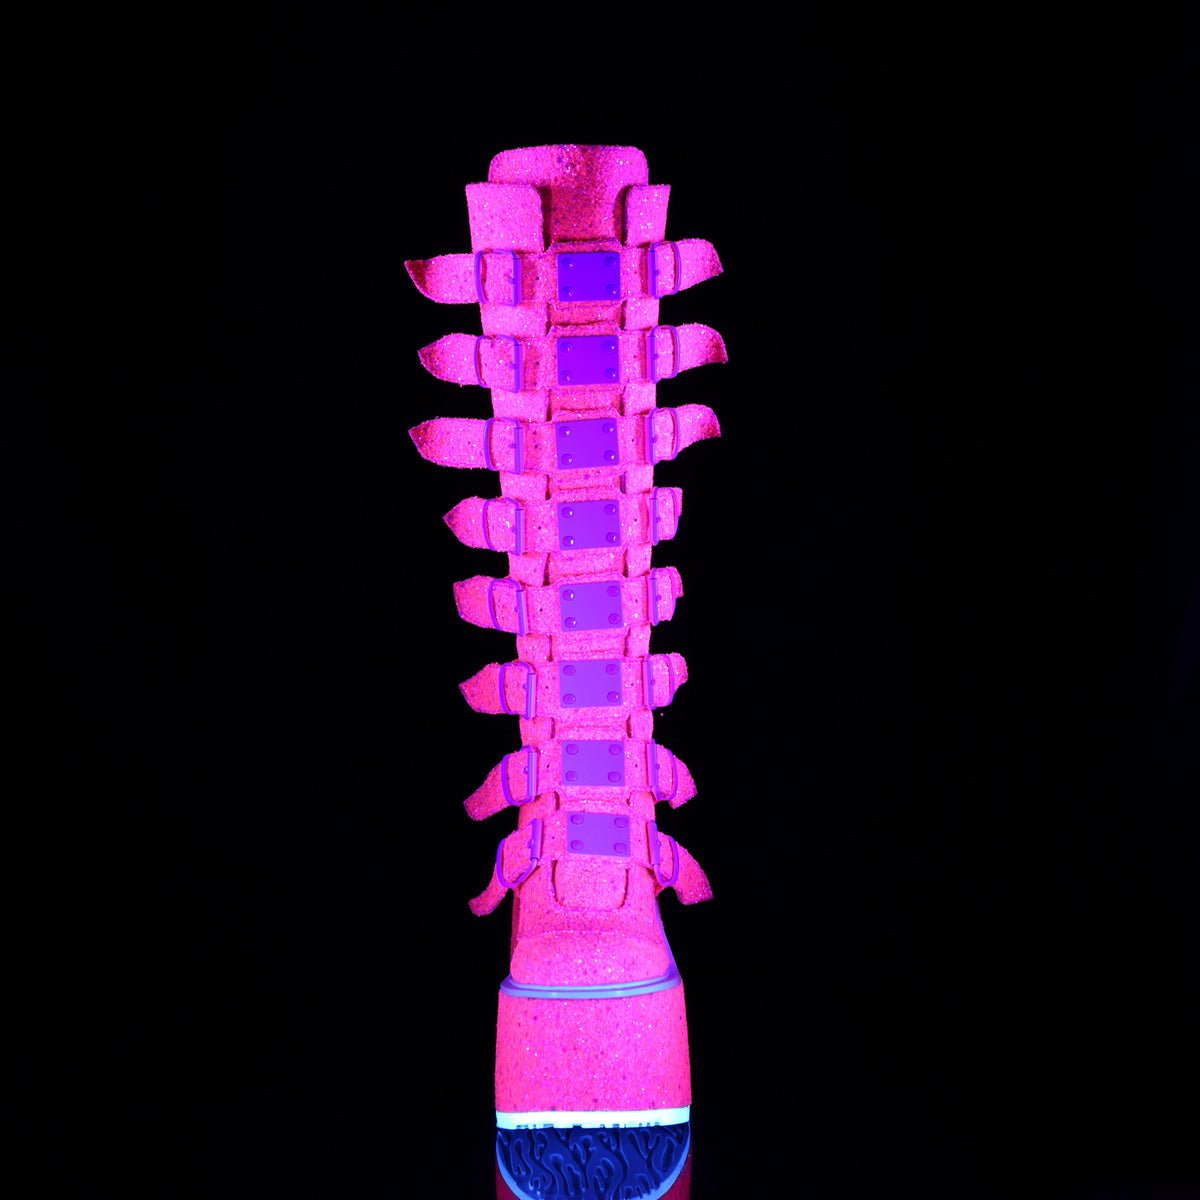 Too Fast | Demonia Swing 815 Uv | Pink Glitter Women's Knee High Boots